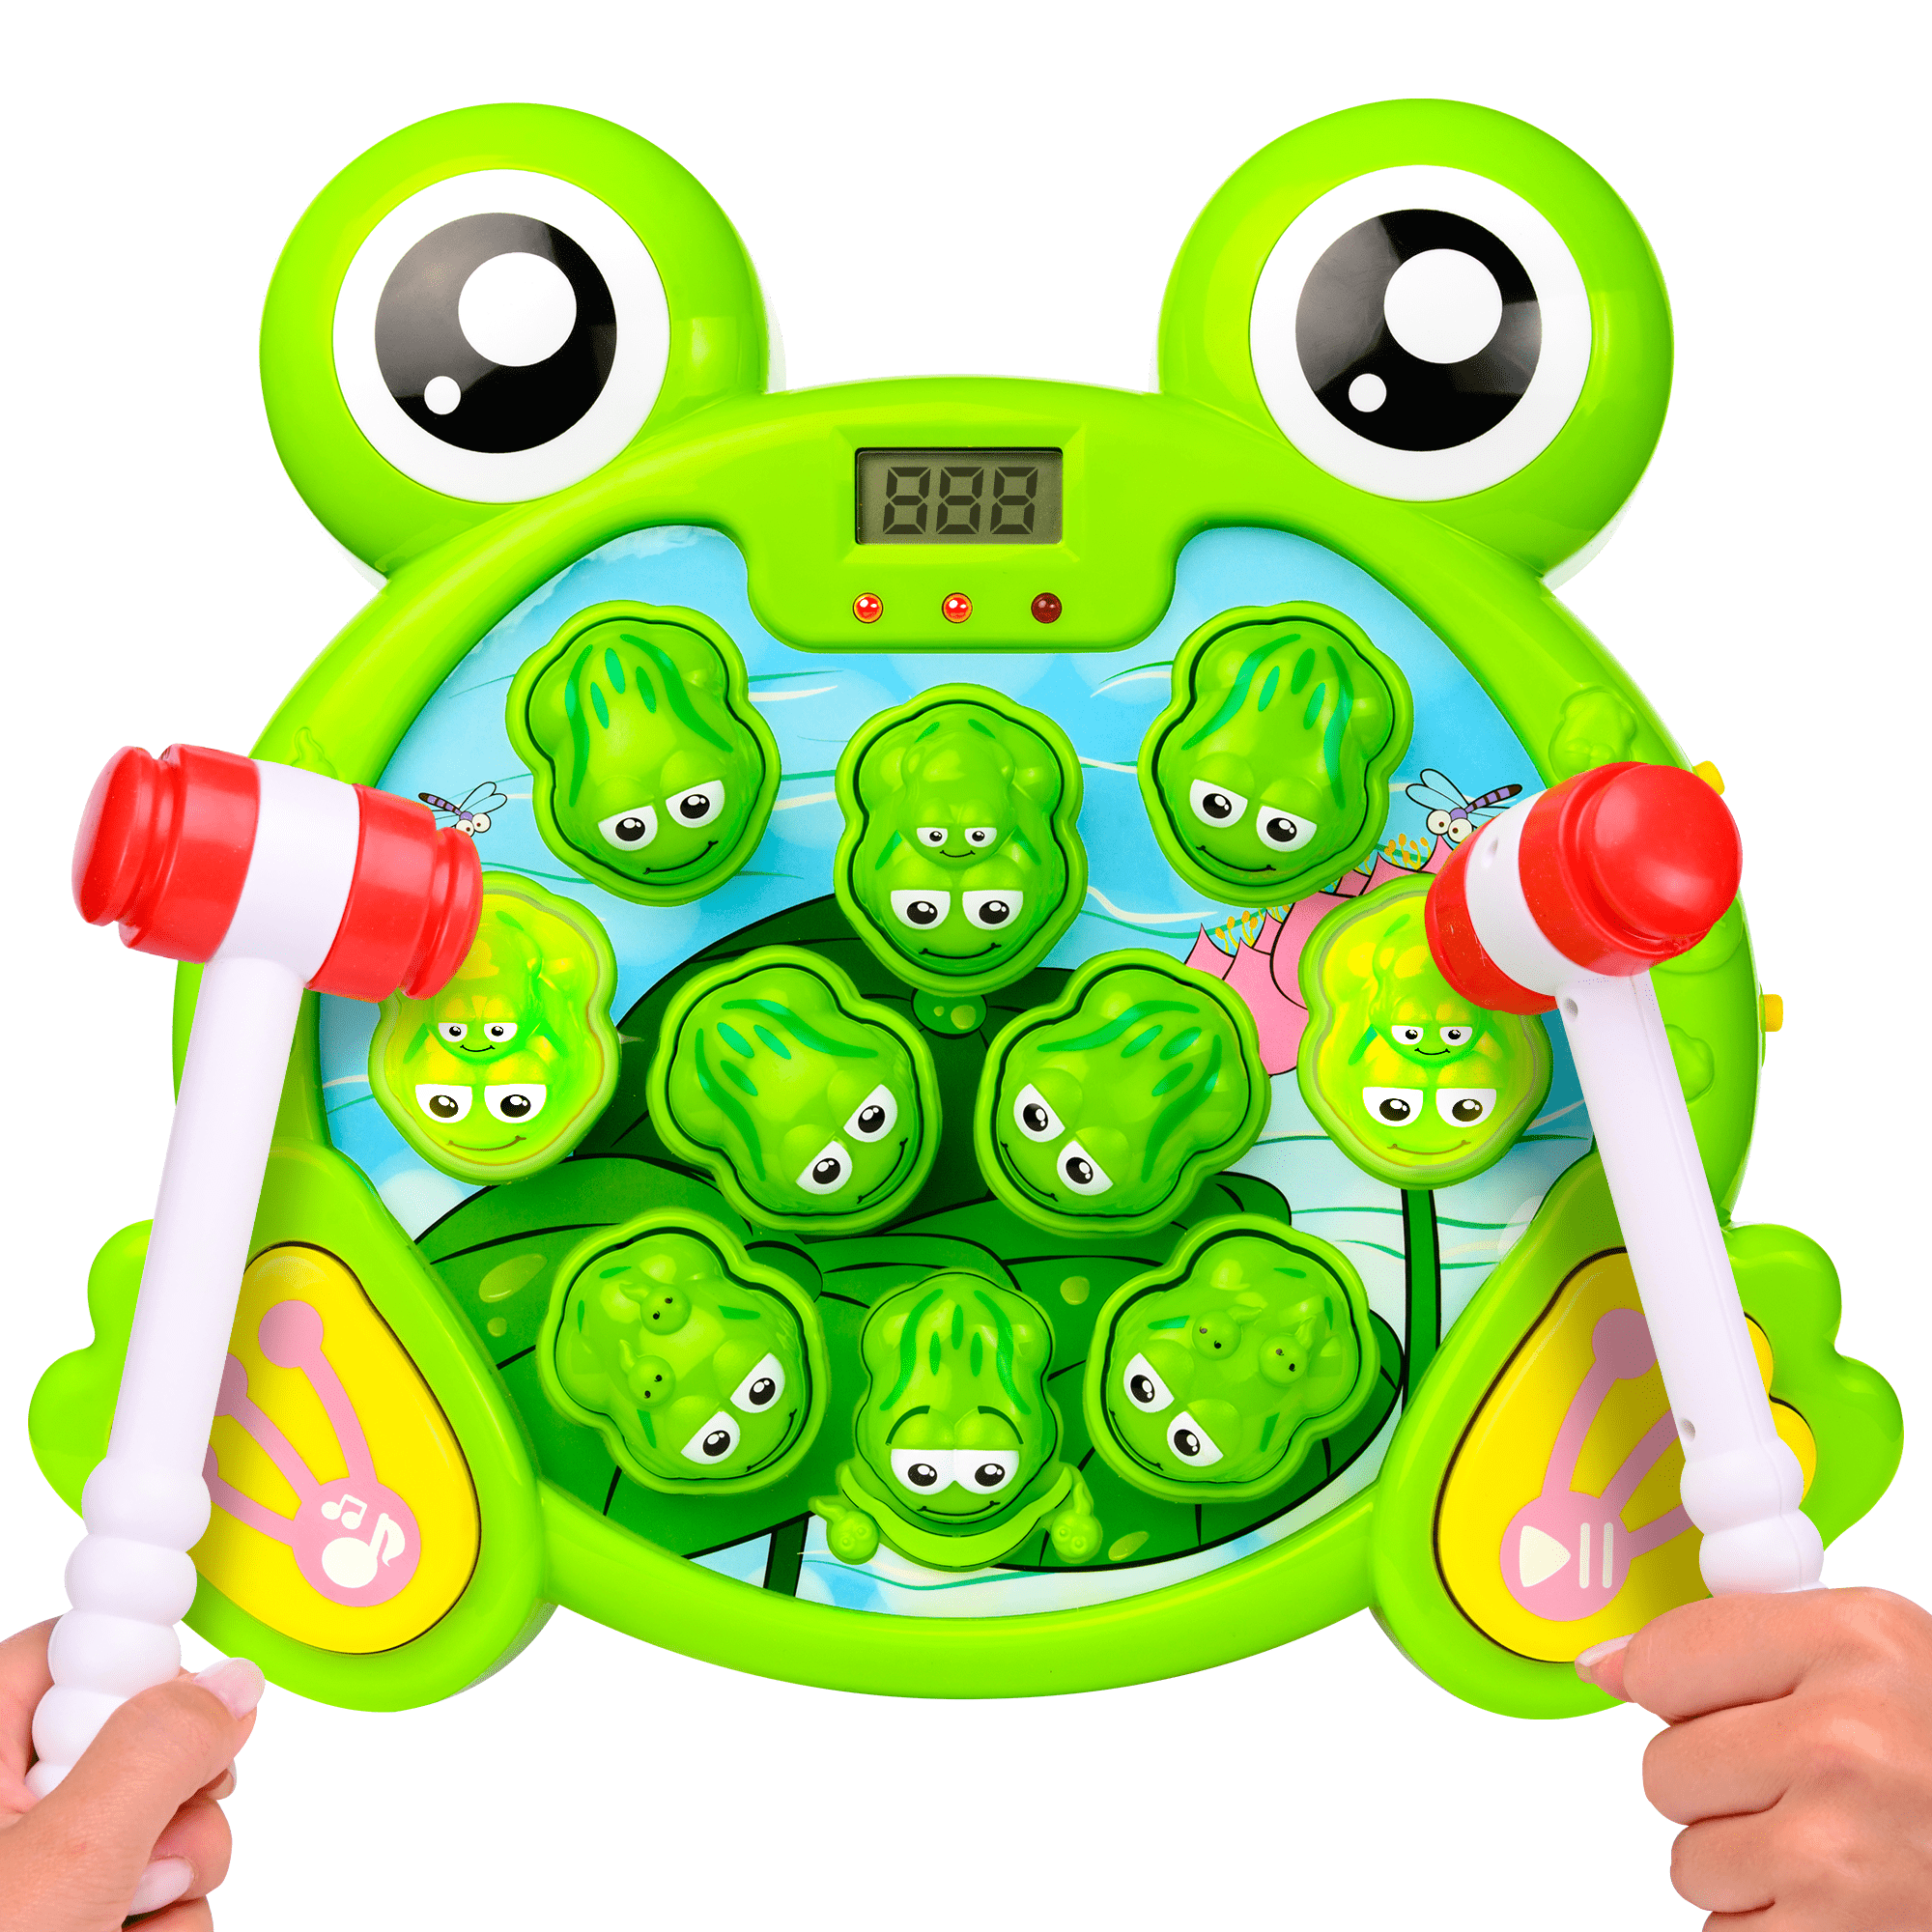 Toysmith Frog Squishimals Toy 